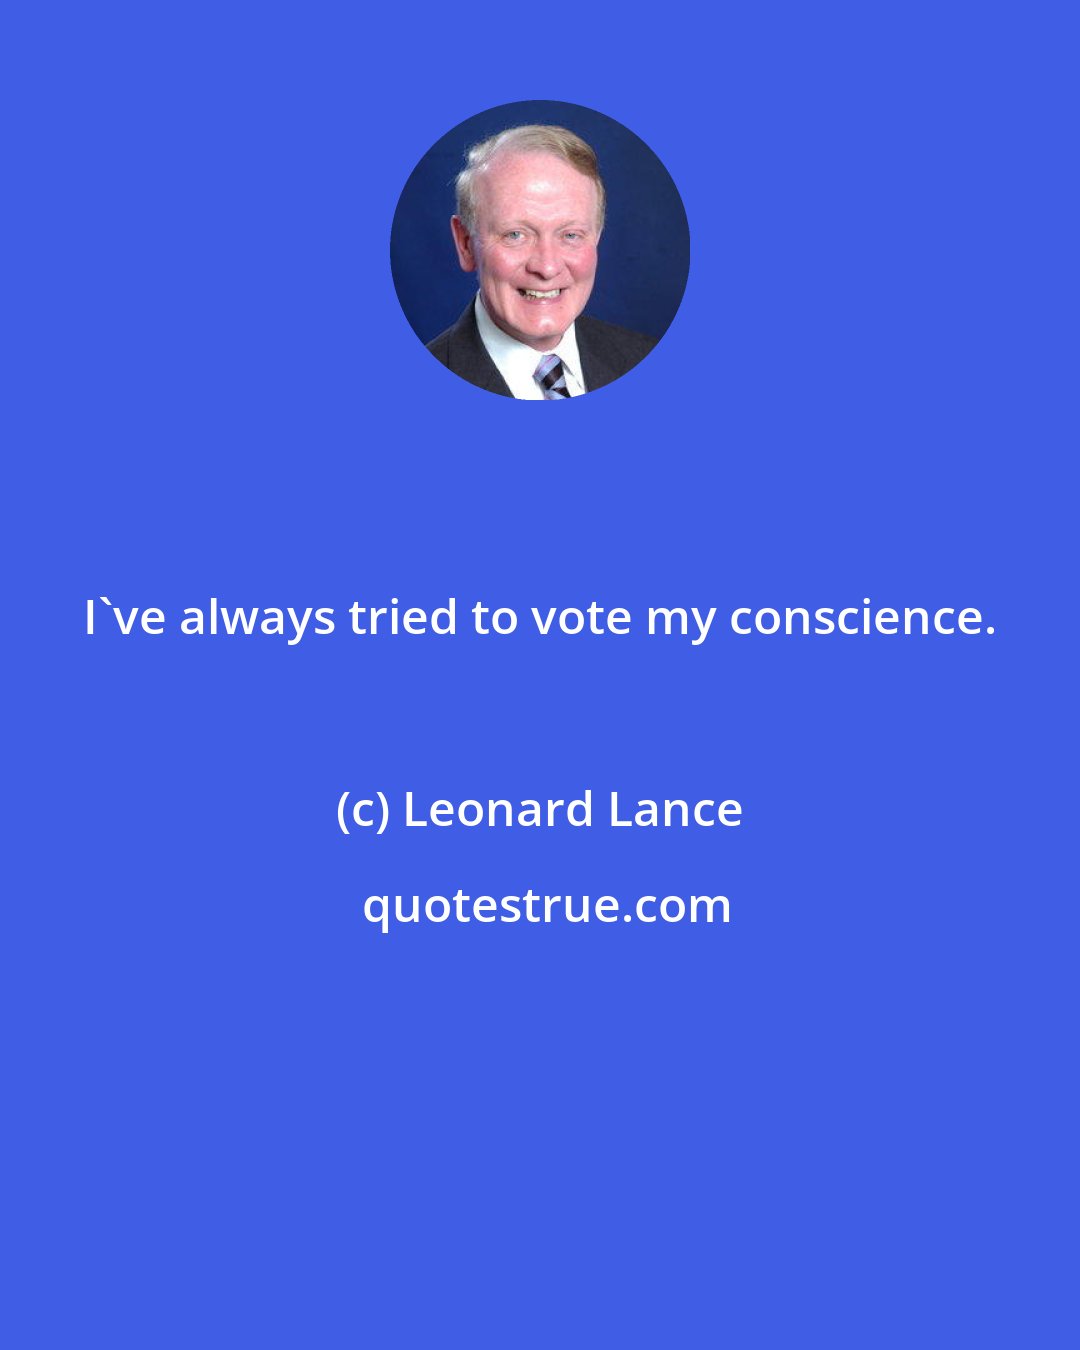 Leonard Lance: I've always tried to vote my conscience.